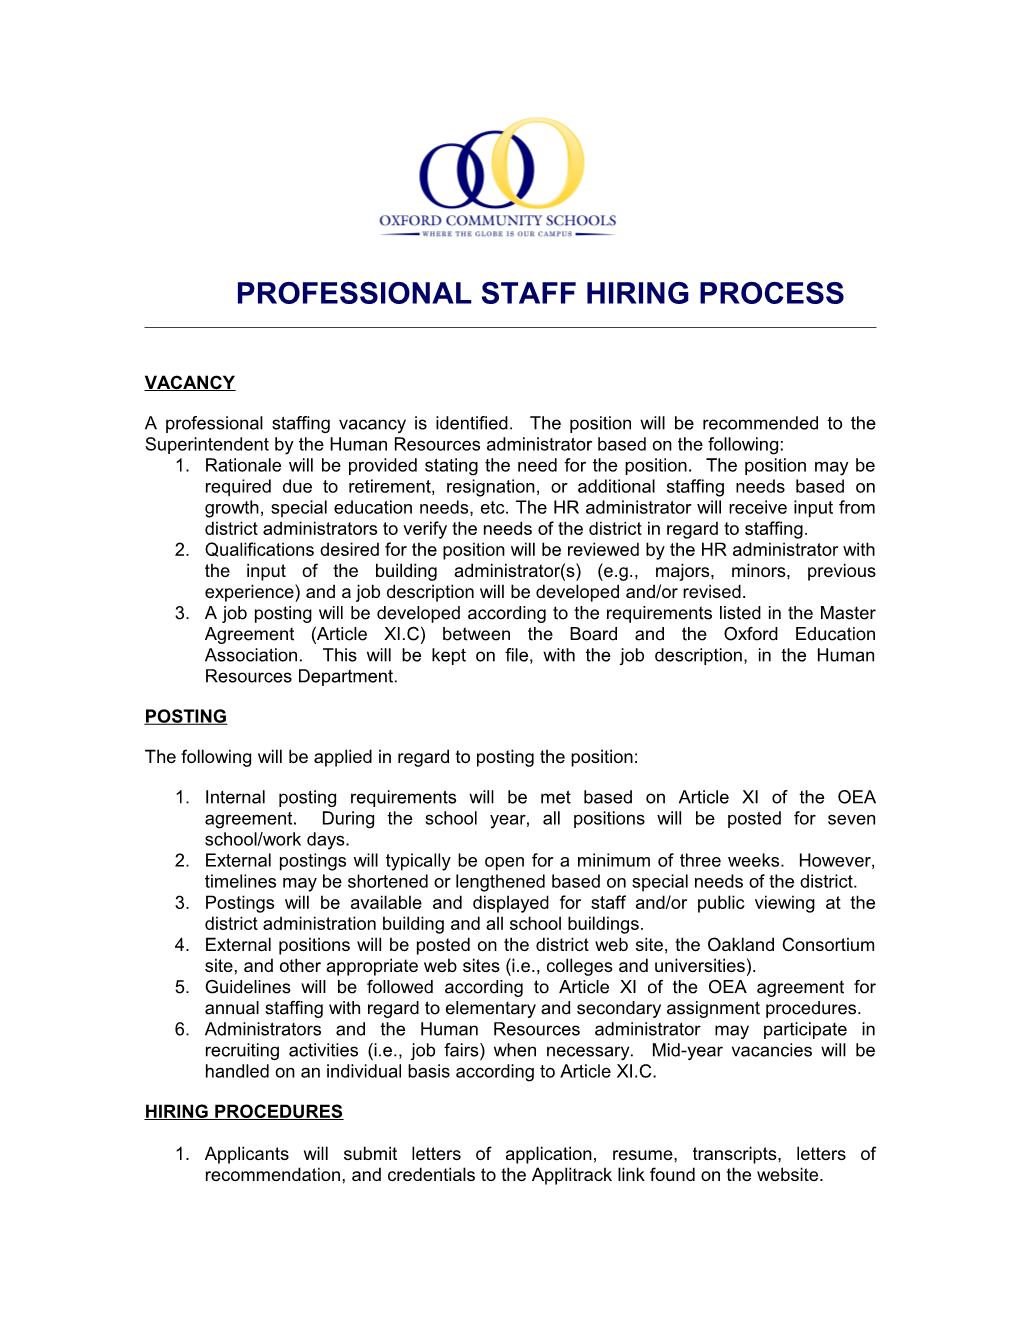 Professional Staff Hiring Process